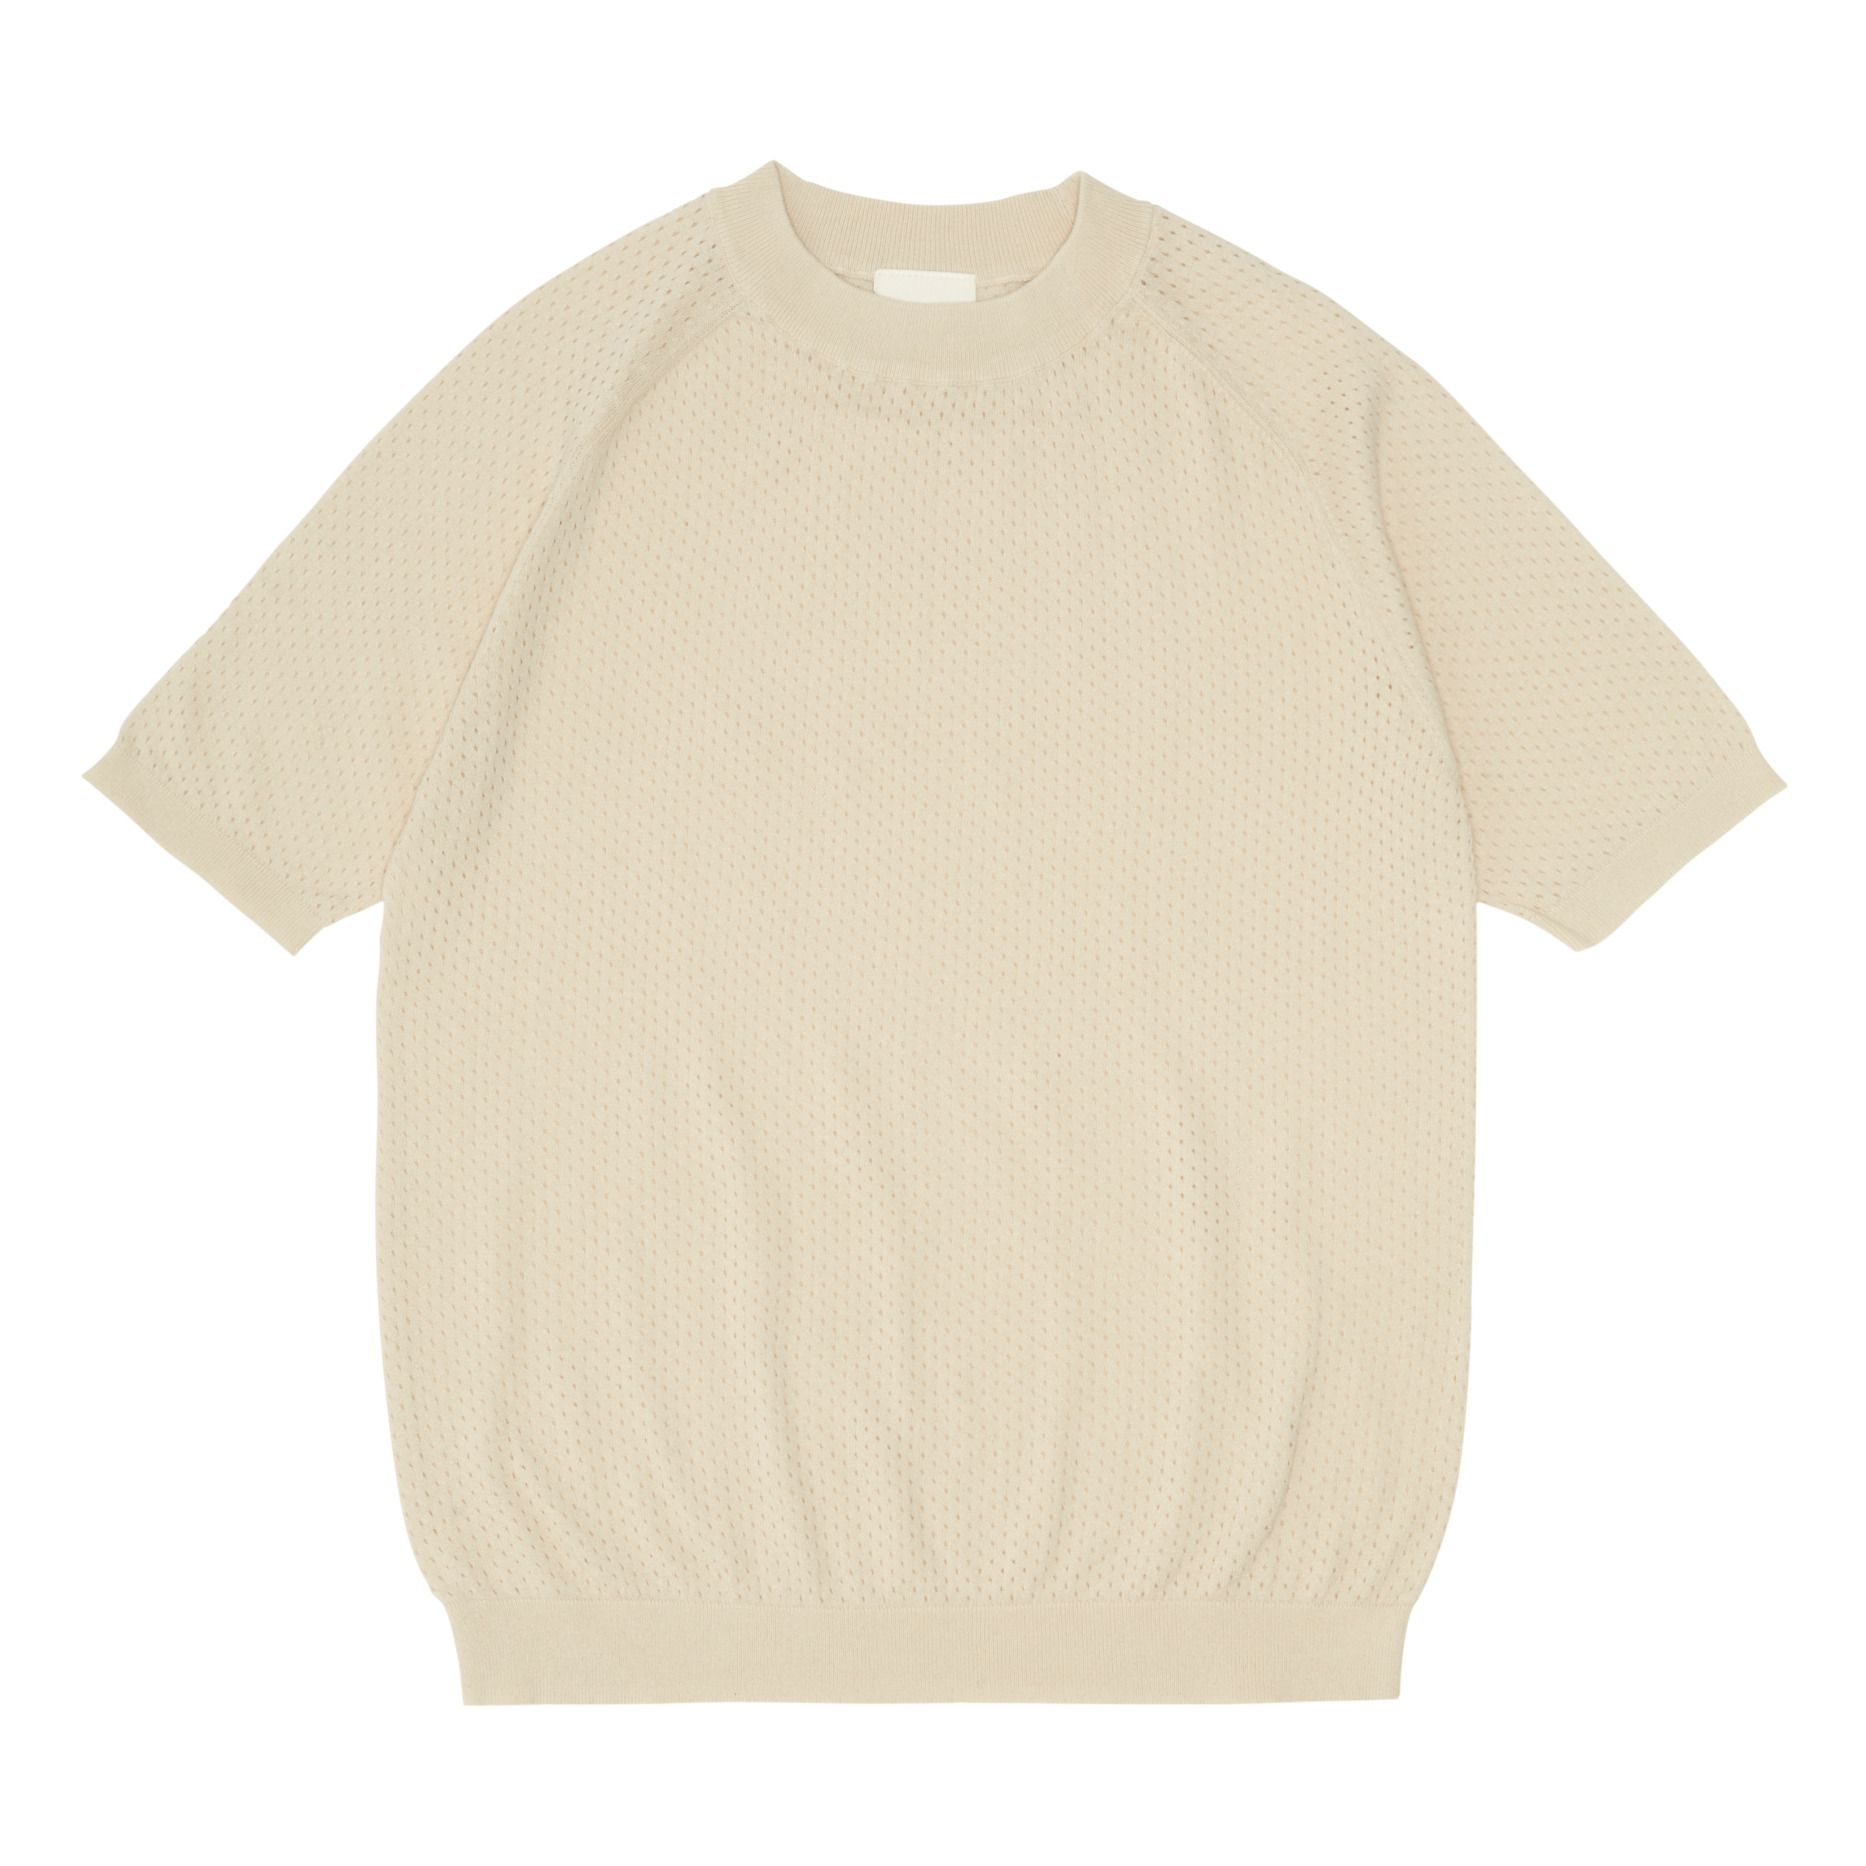 FUB - T-shirt Uni Coton Bio - Femme - Ecru